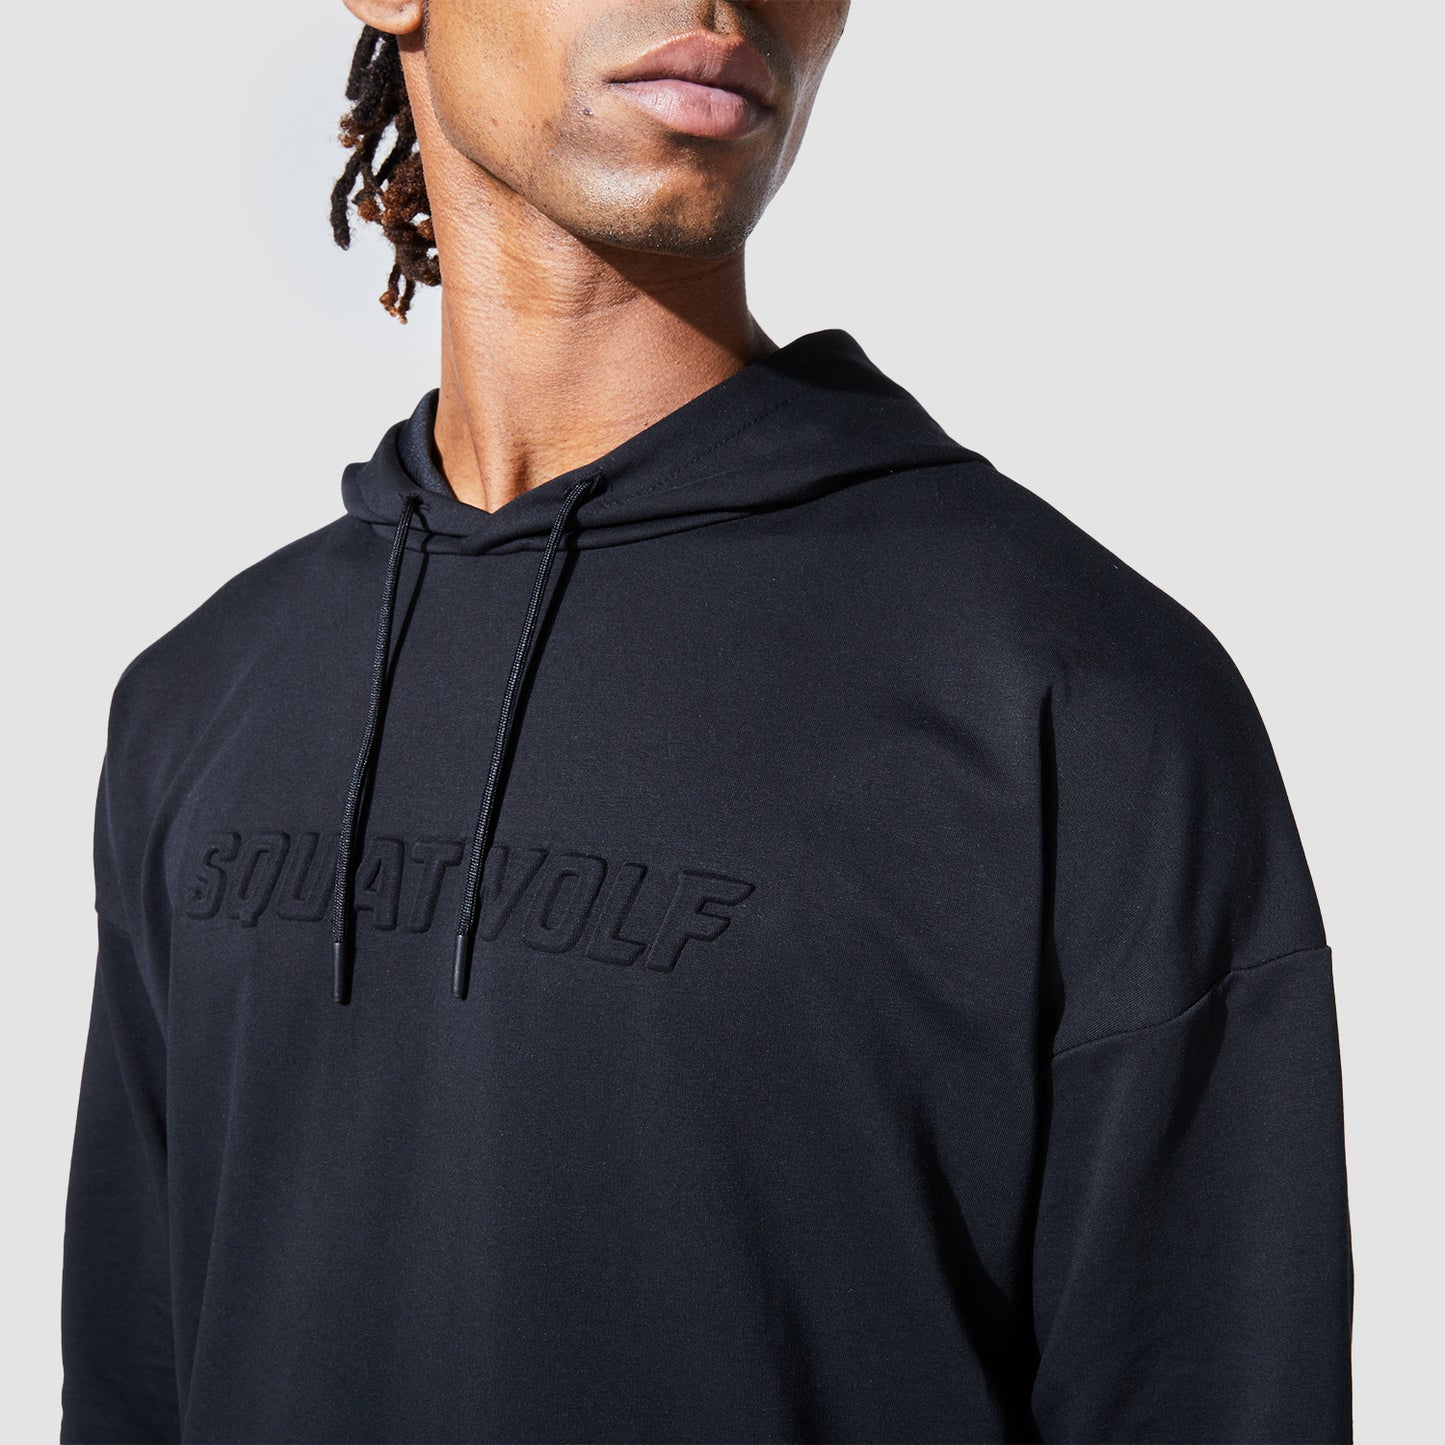 squatwolf-gym-wear-graphic-wordmark-hoodie-black-workout-hoodies-for-men